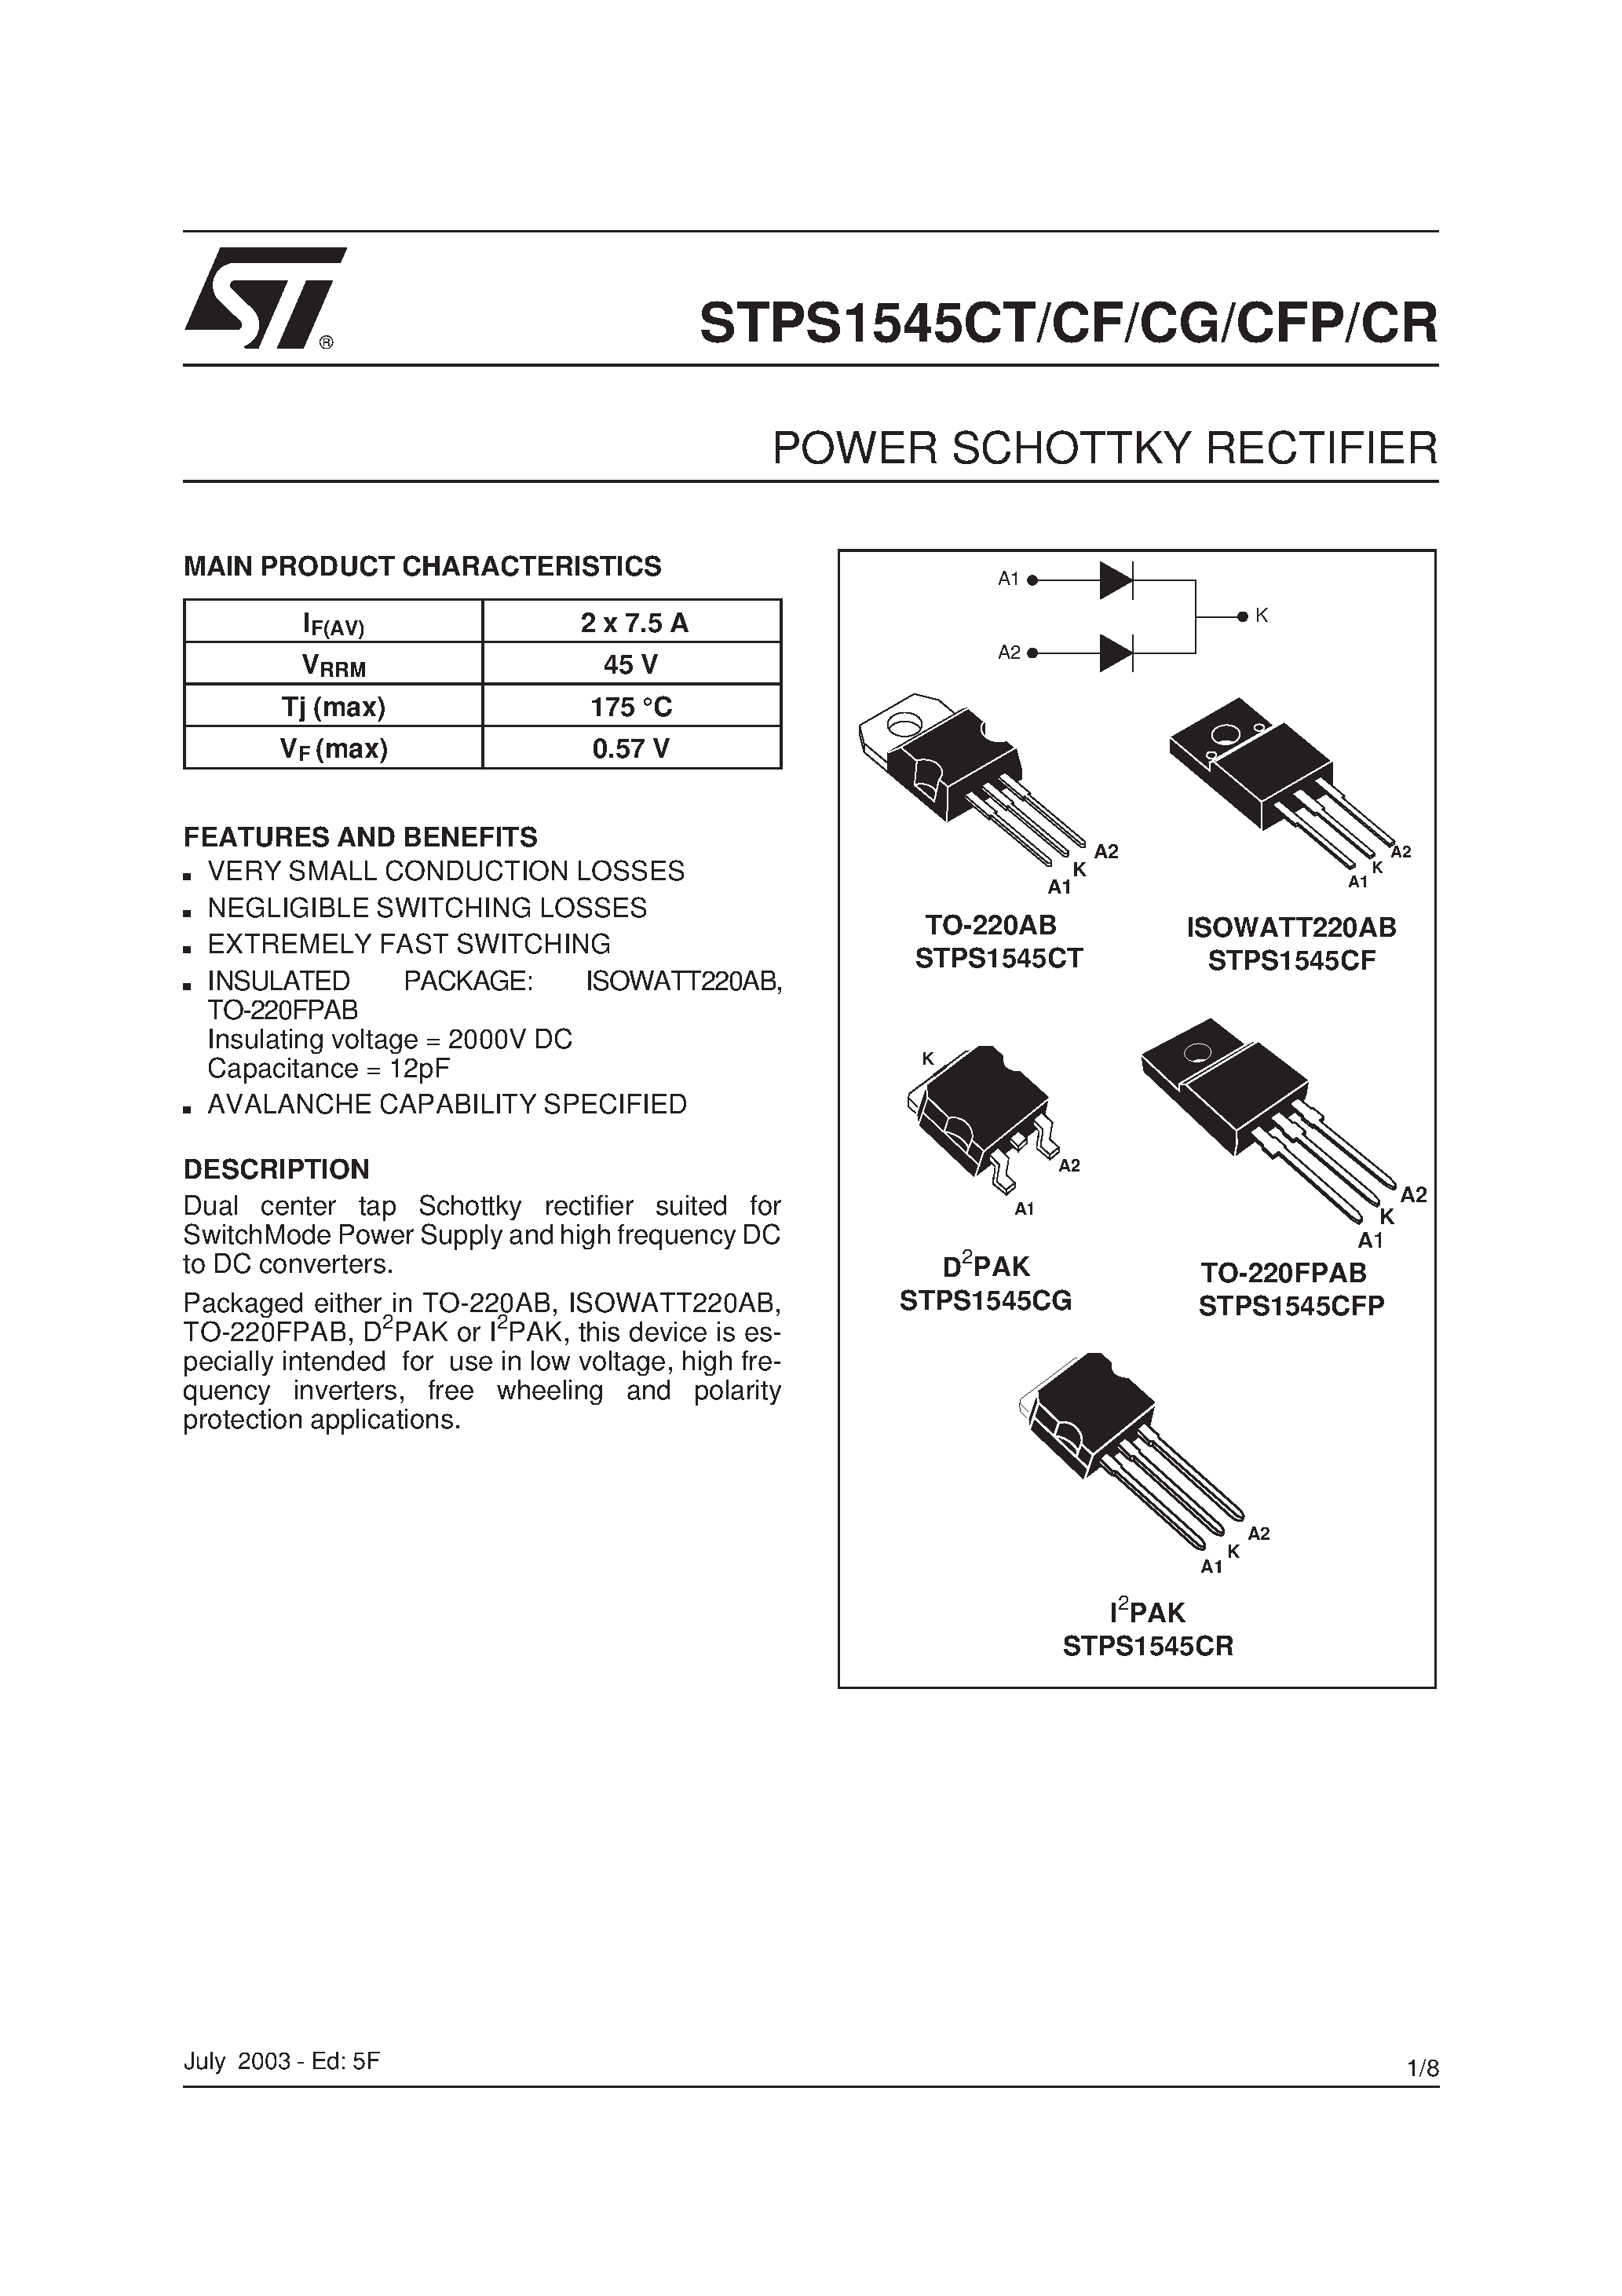 Datasheet STPS1545CF - (STPS1545CT/CF/CG/CFP/CR) POWER SCHOTTKY RECTIFIER page 1